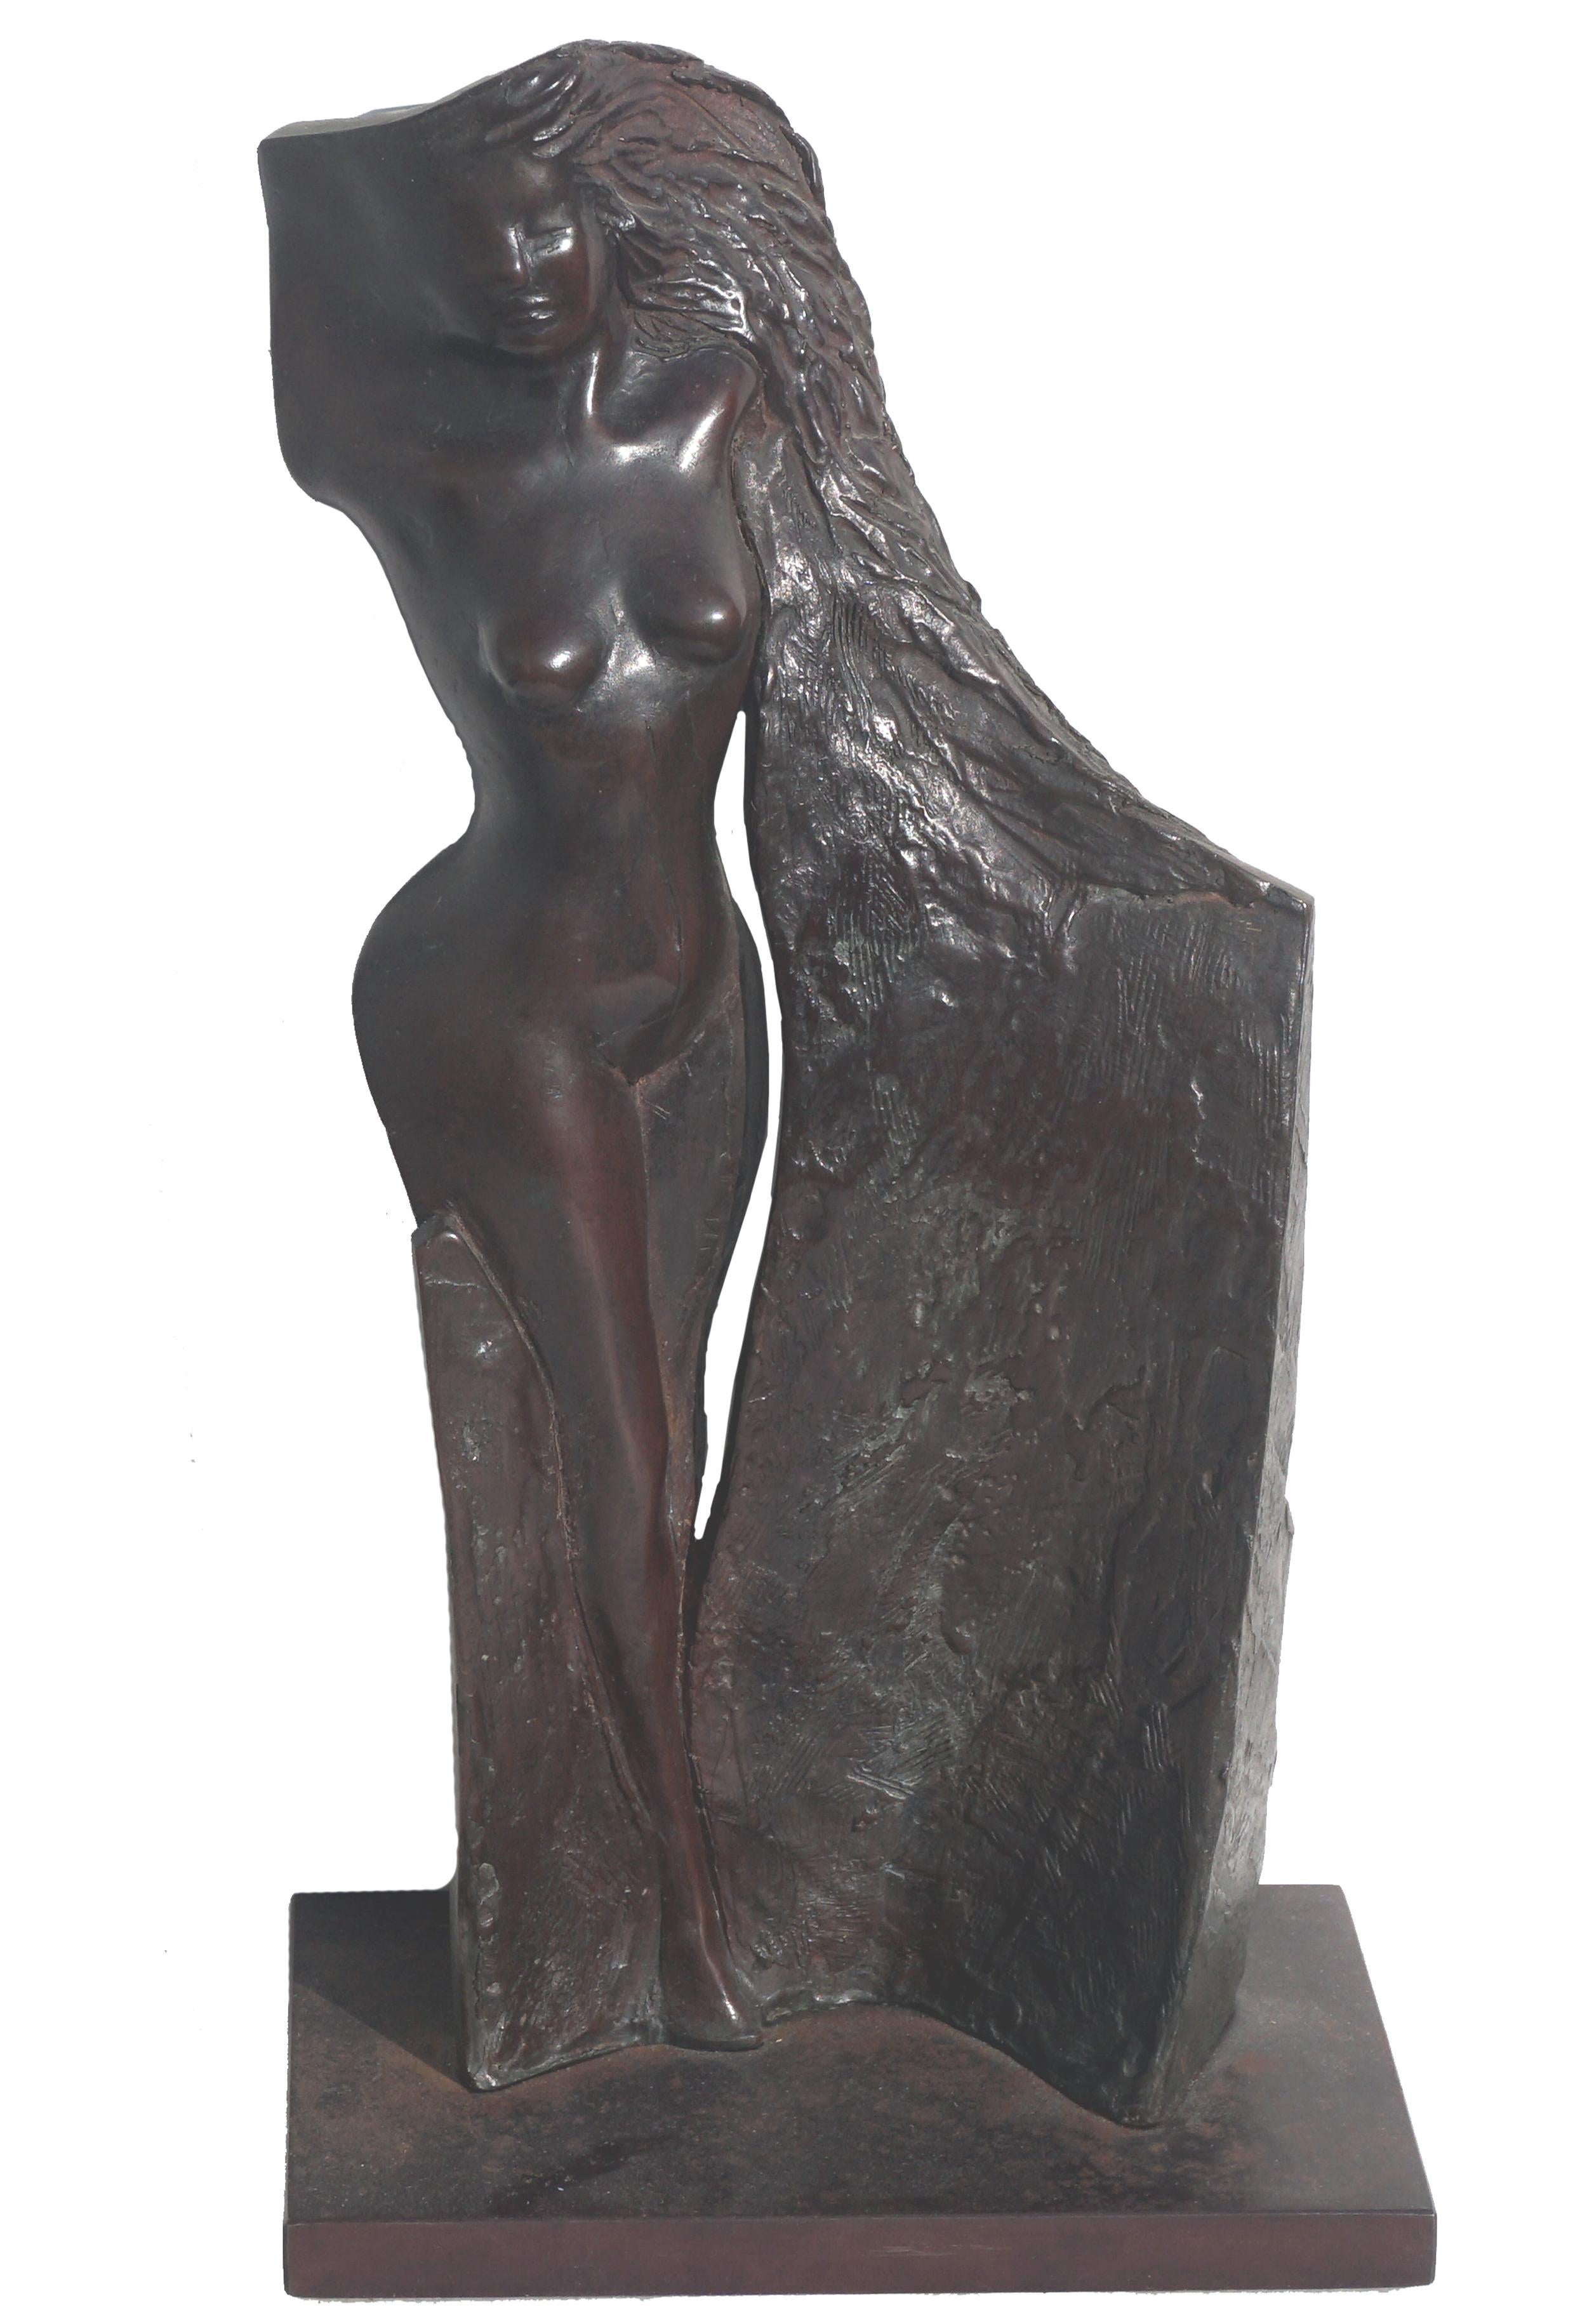 Nude Sculpture Francis Xavier Bracken - Sculpture moderniste d'une femme nude